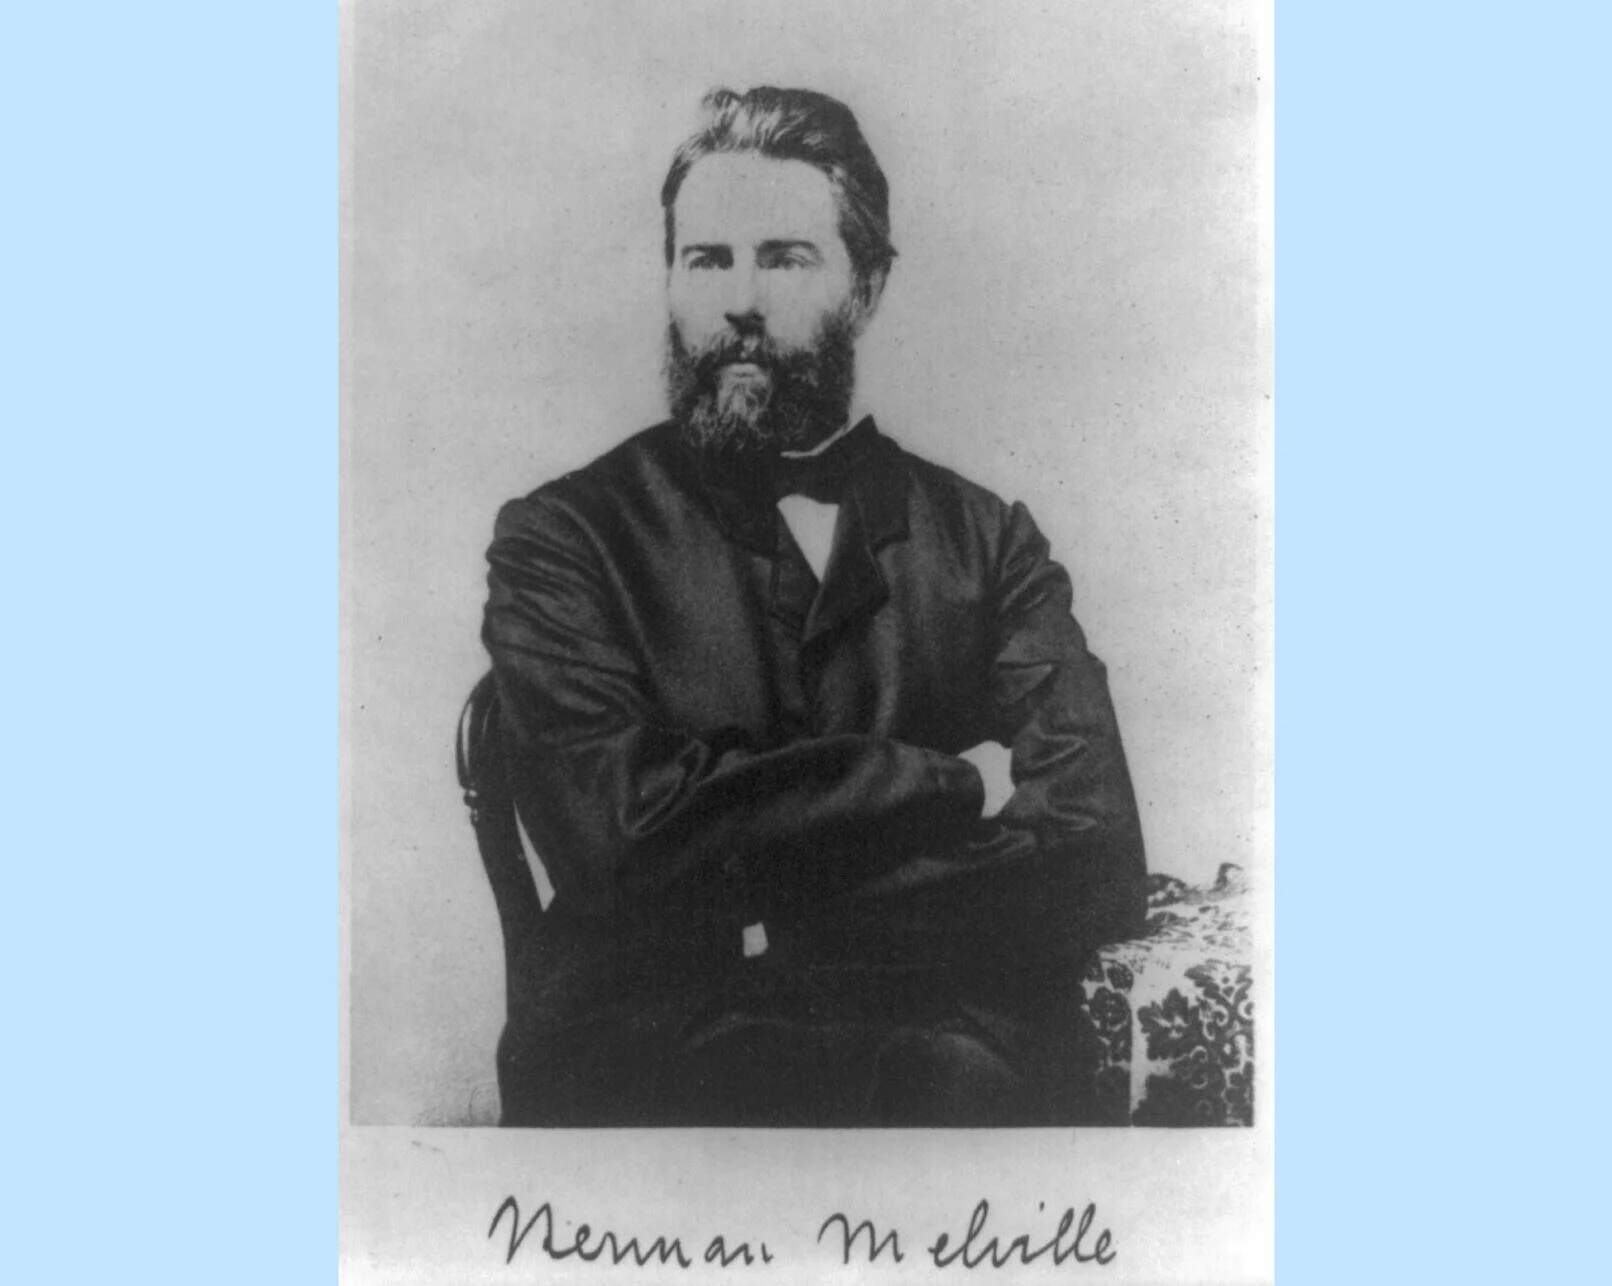 Author Herman Melville, circa 1860. (Courtesy of the Library of Congress via SHNS)